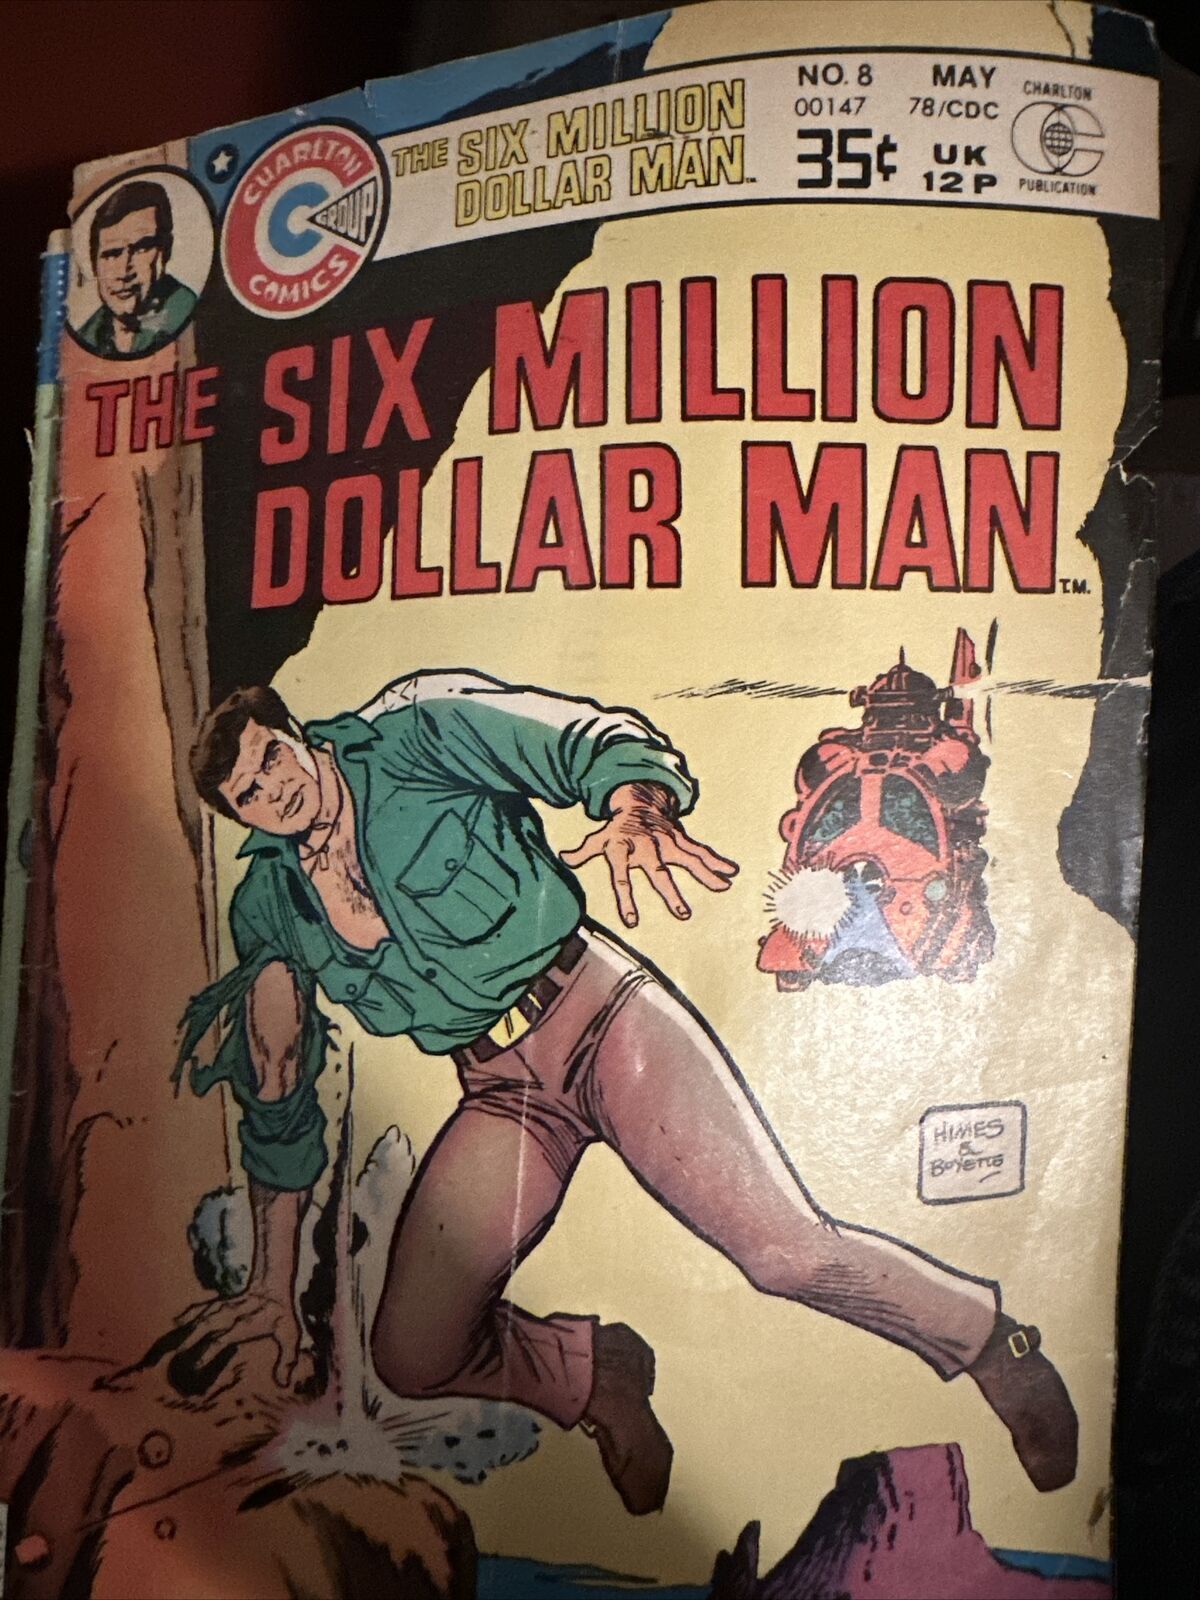 the six million dollar man #8